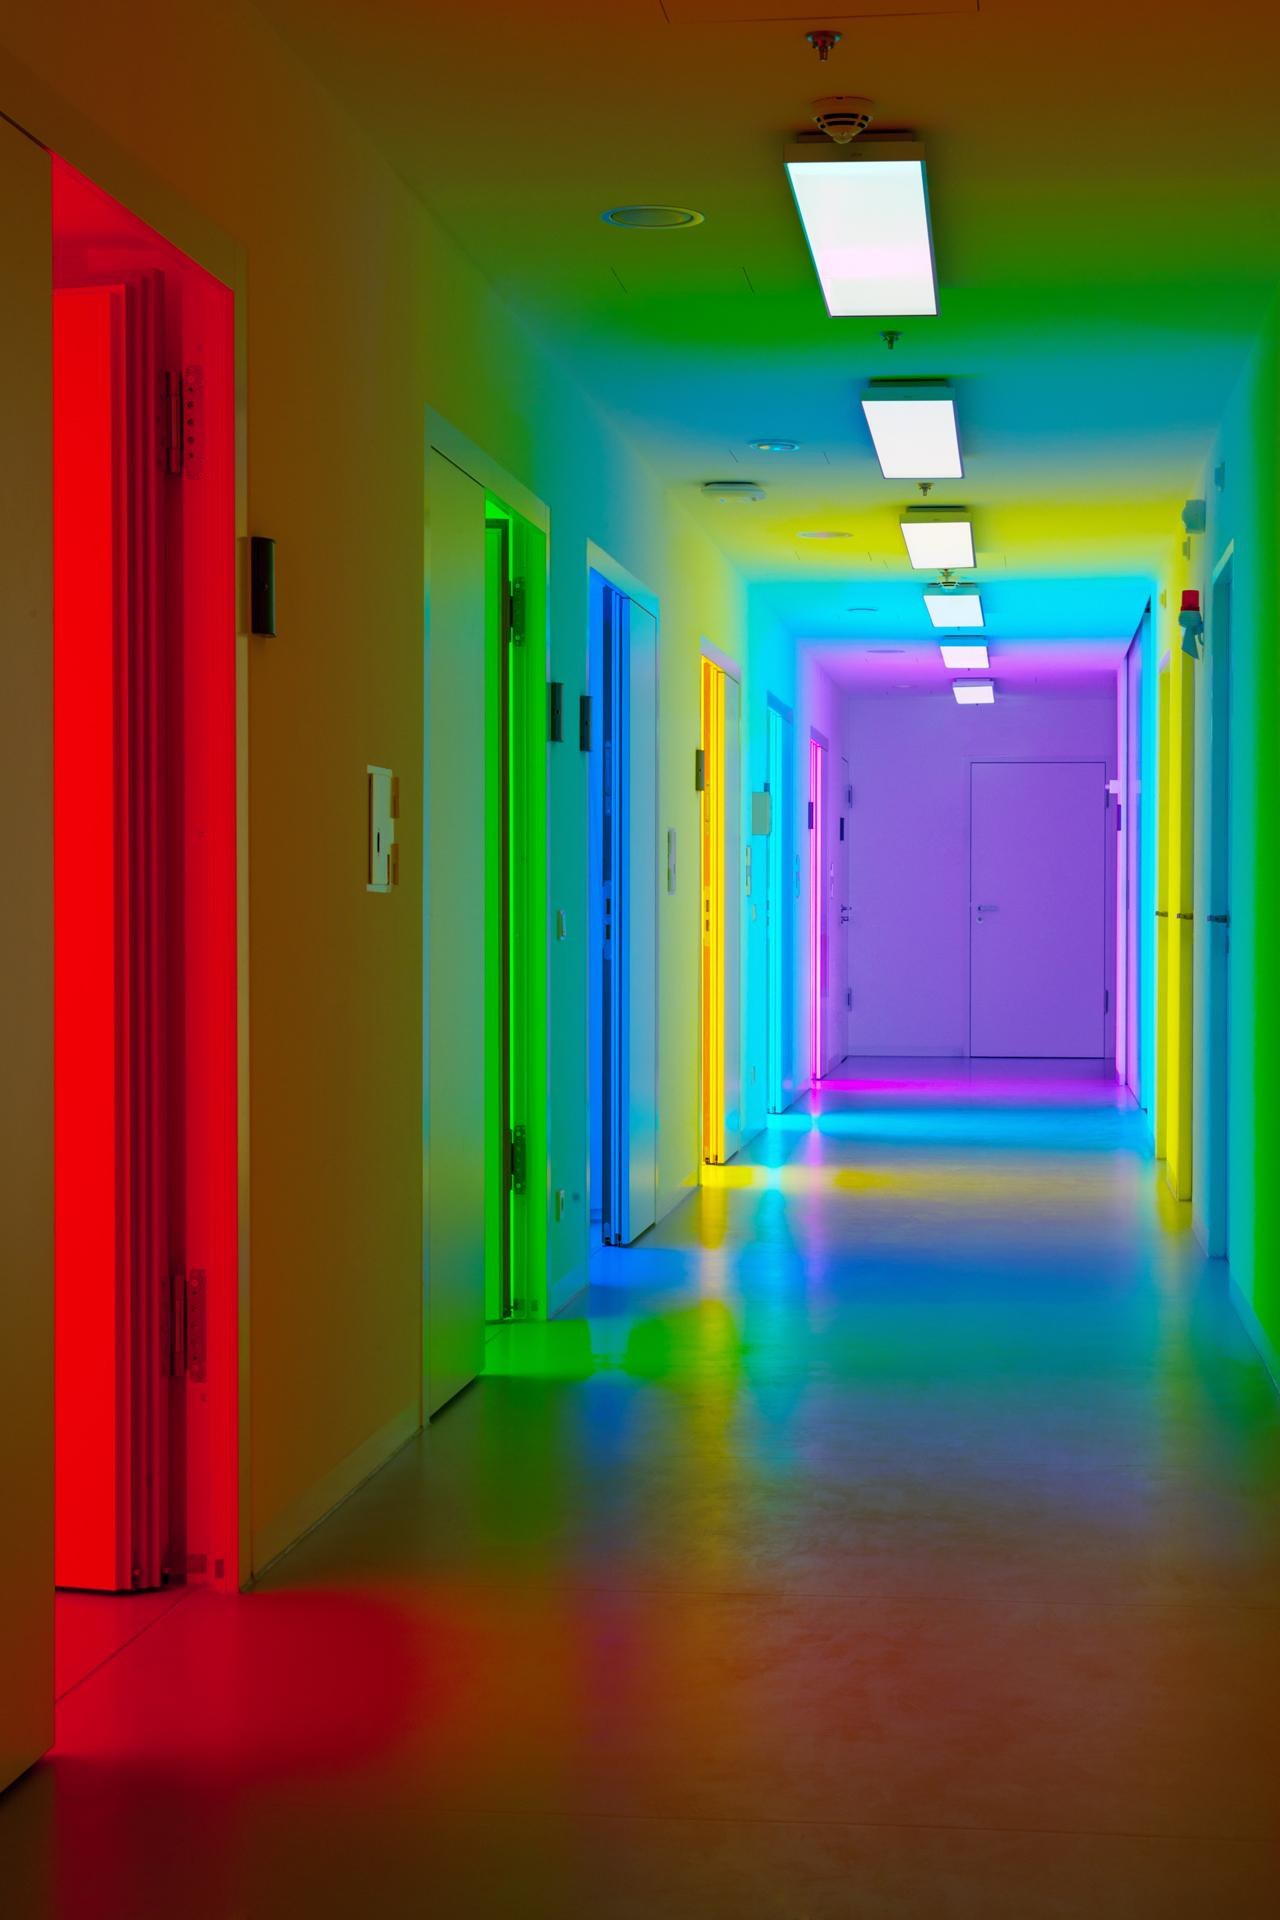 Test ward hallway